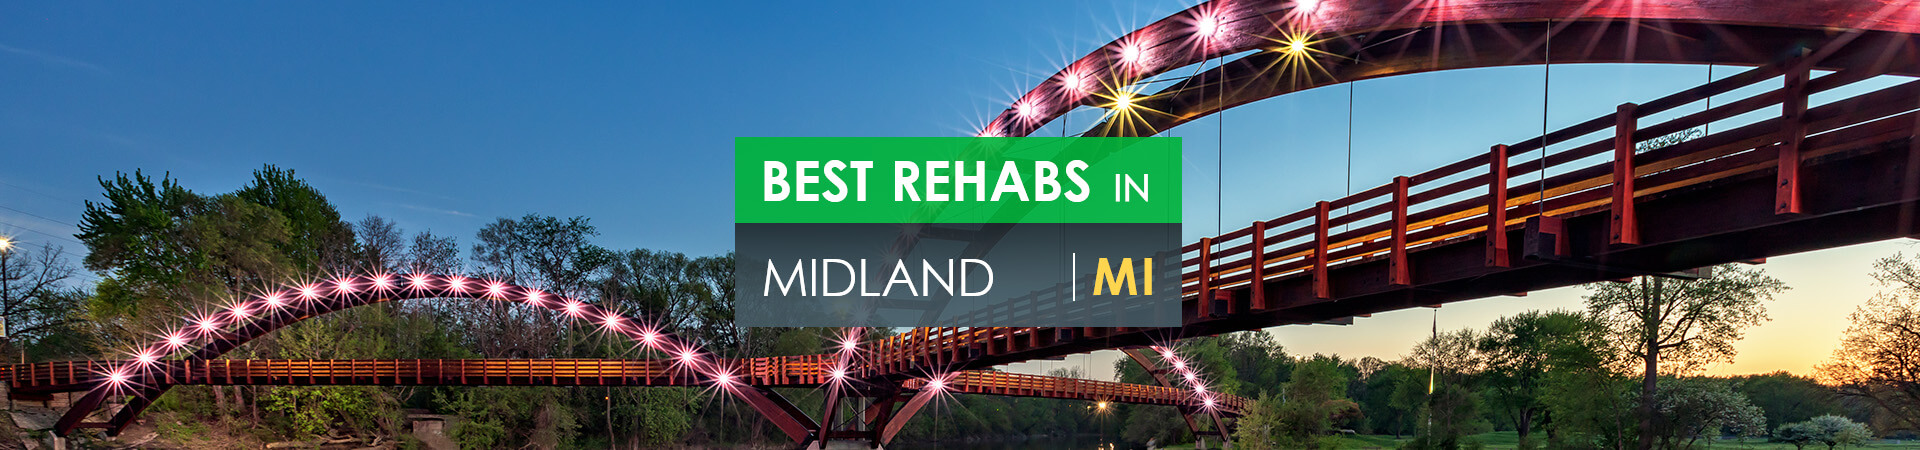 Best rehabs in Midland, MI